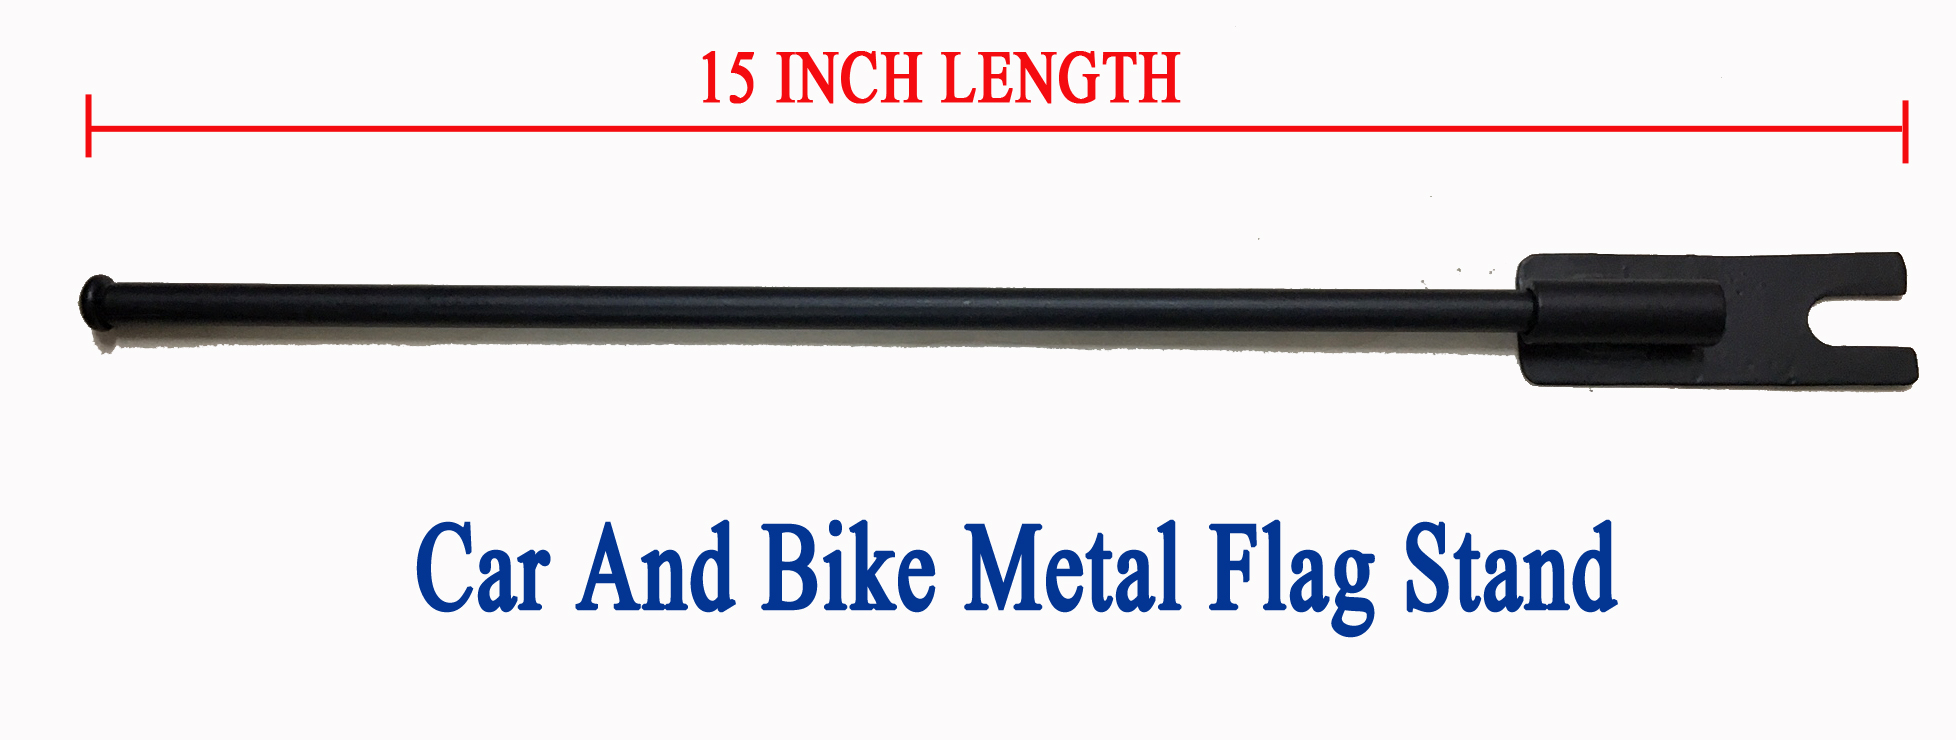 Car And Bike Metal Flag Stand